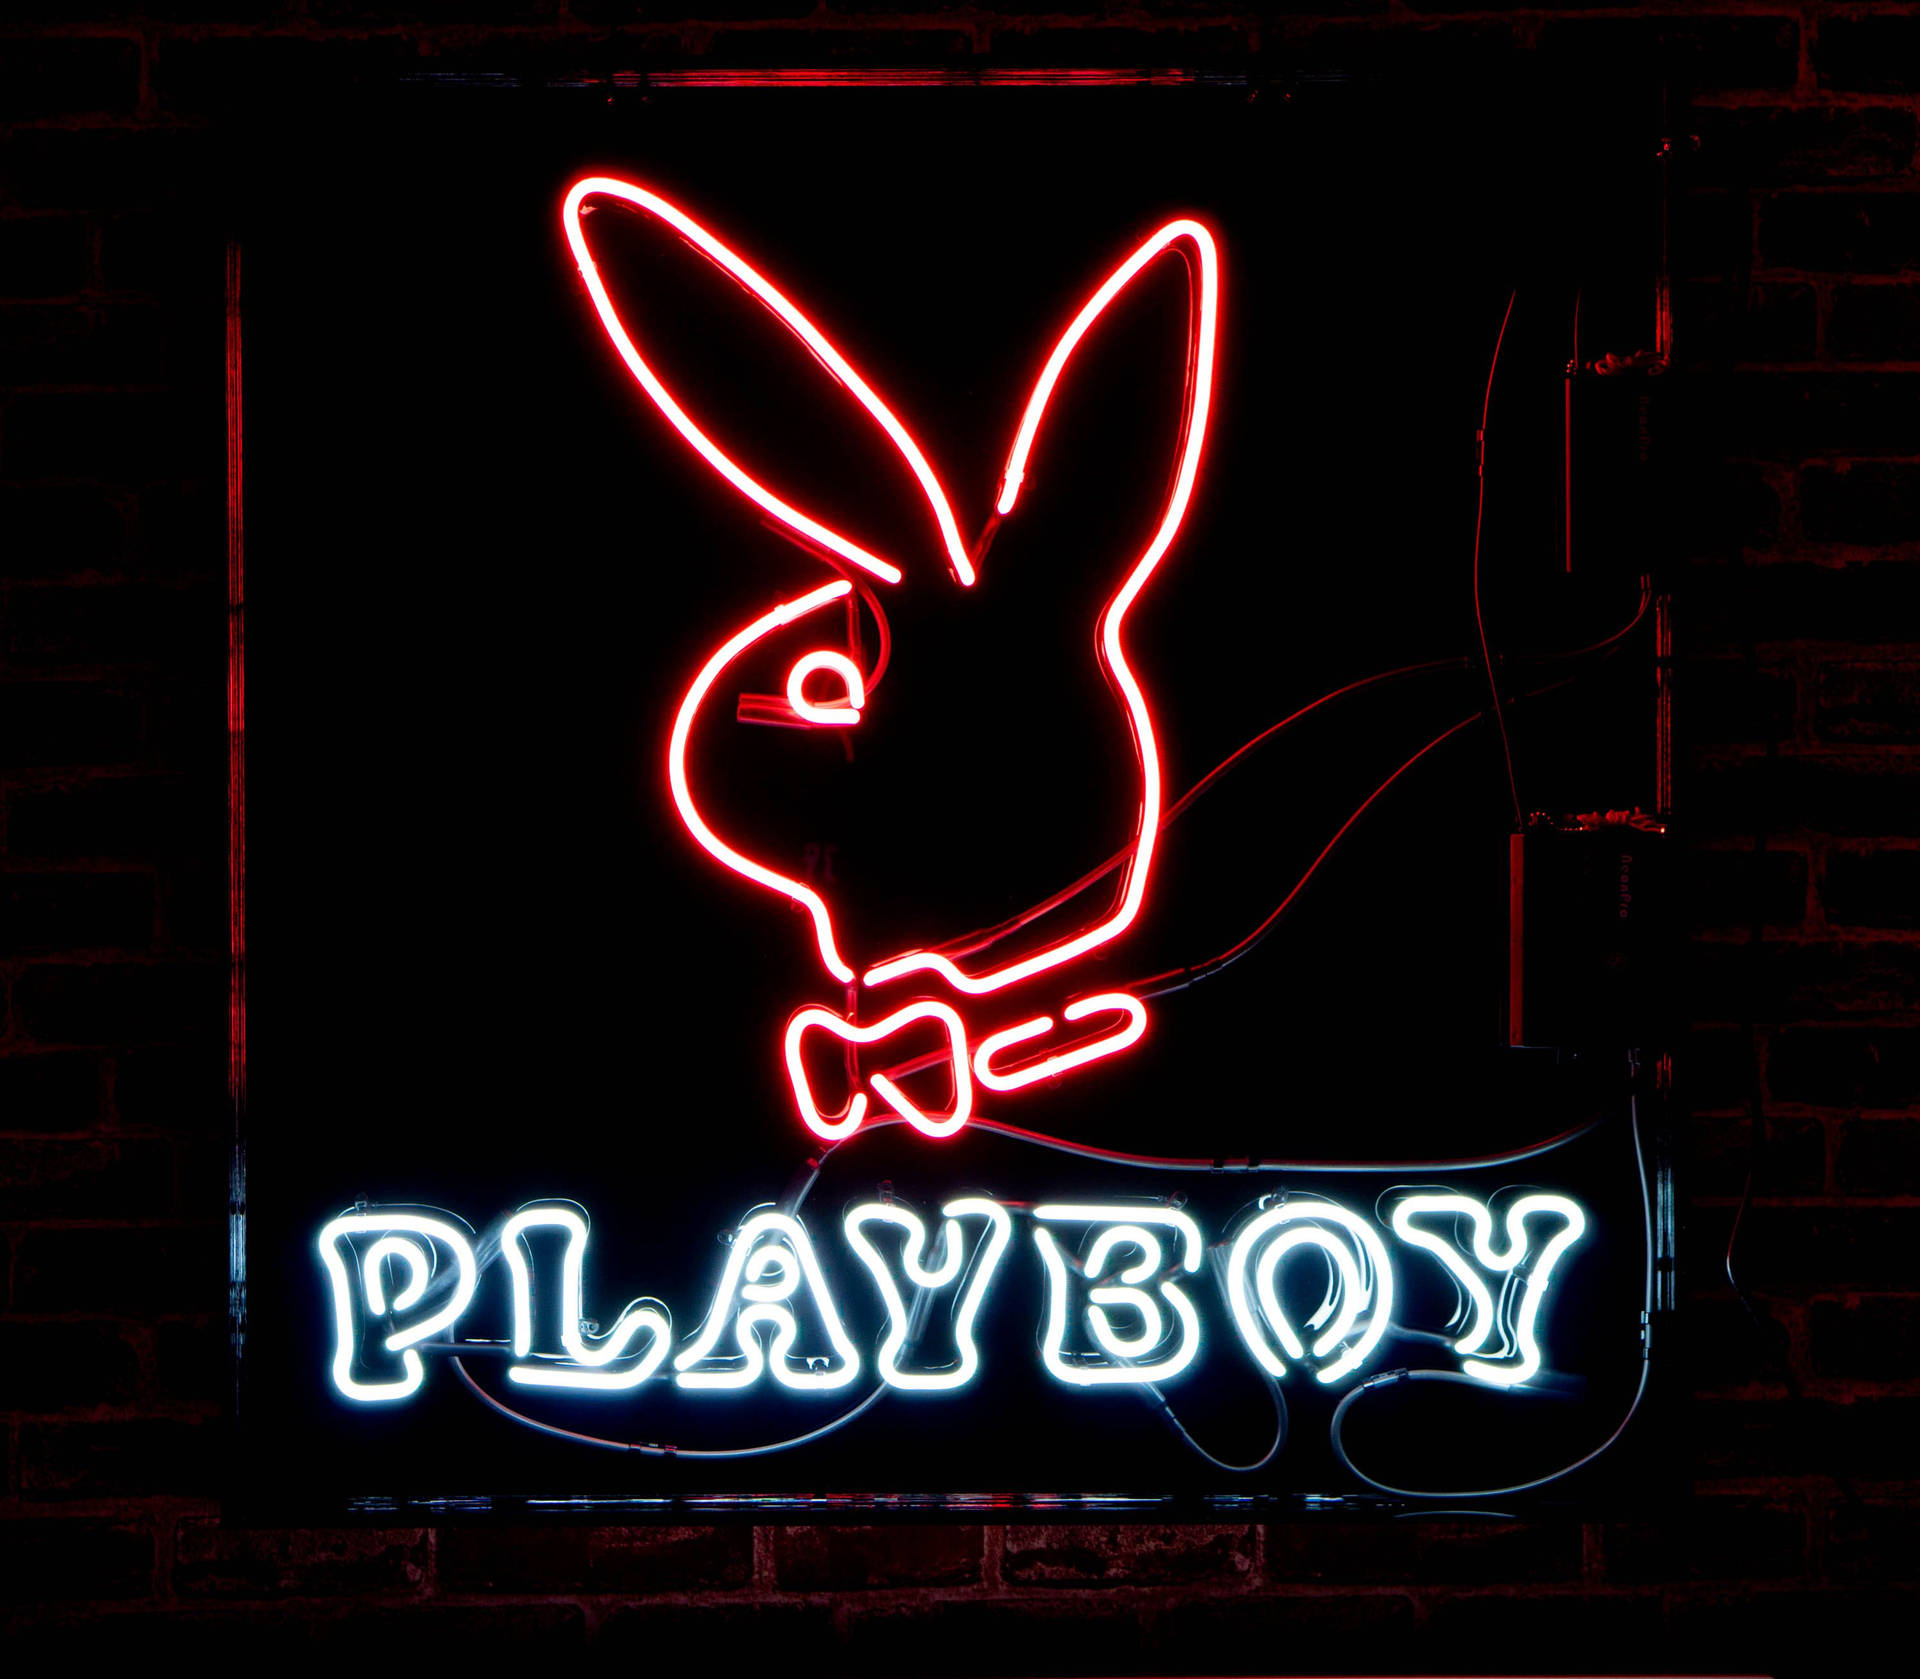 Playboy-billeder